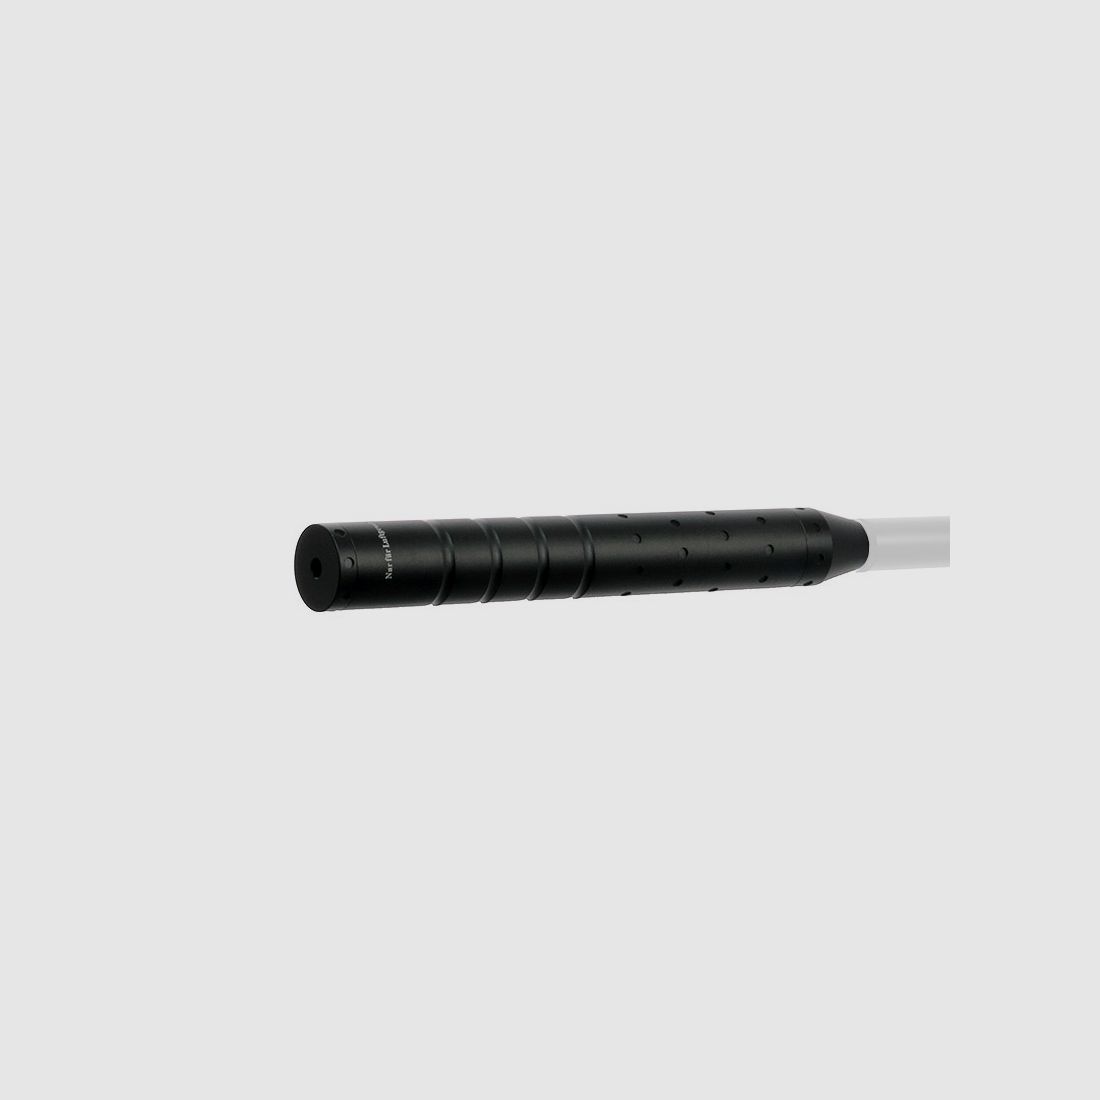 B-Ware Leader SchalldĂ¤mpfer Aluminium schraubbar 1/2 Zoll UNF Gewinde schwarz Kaliber 4,5 bis 5,5 mm (P18)